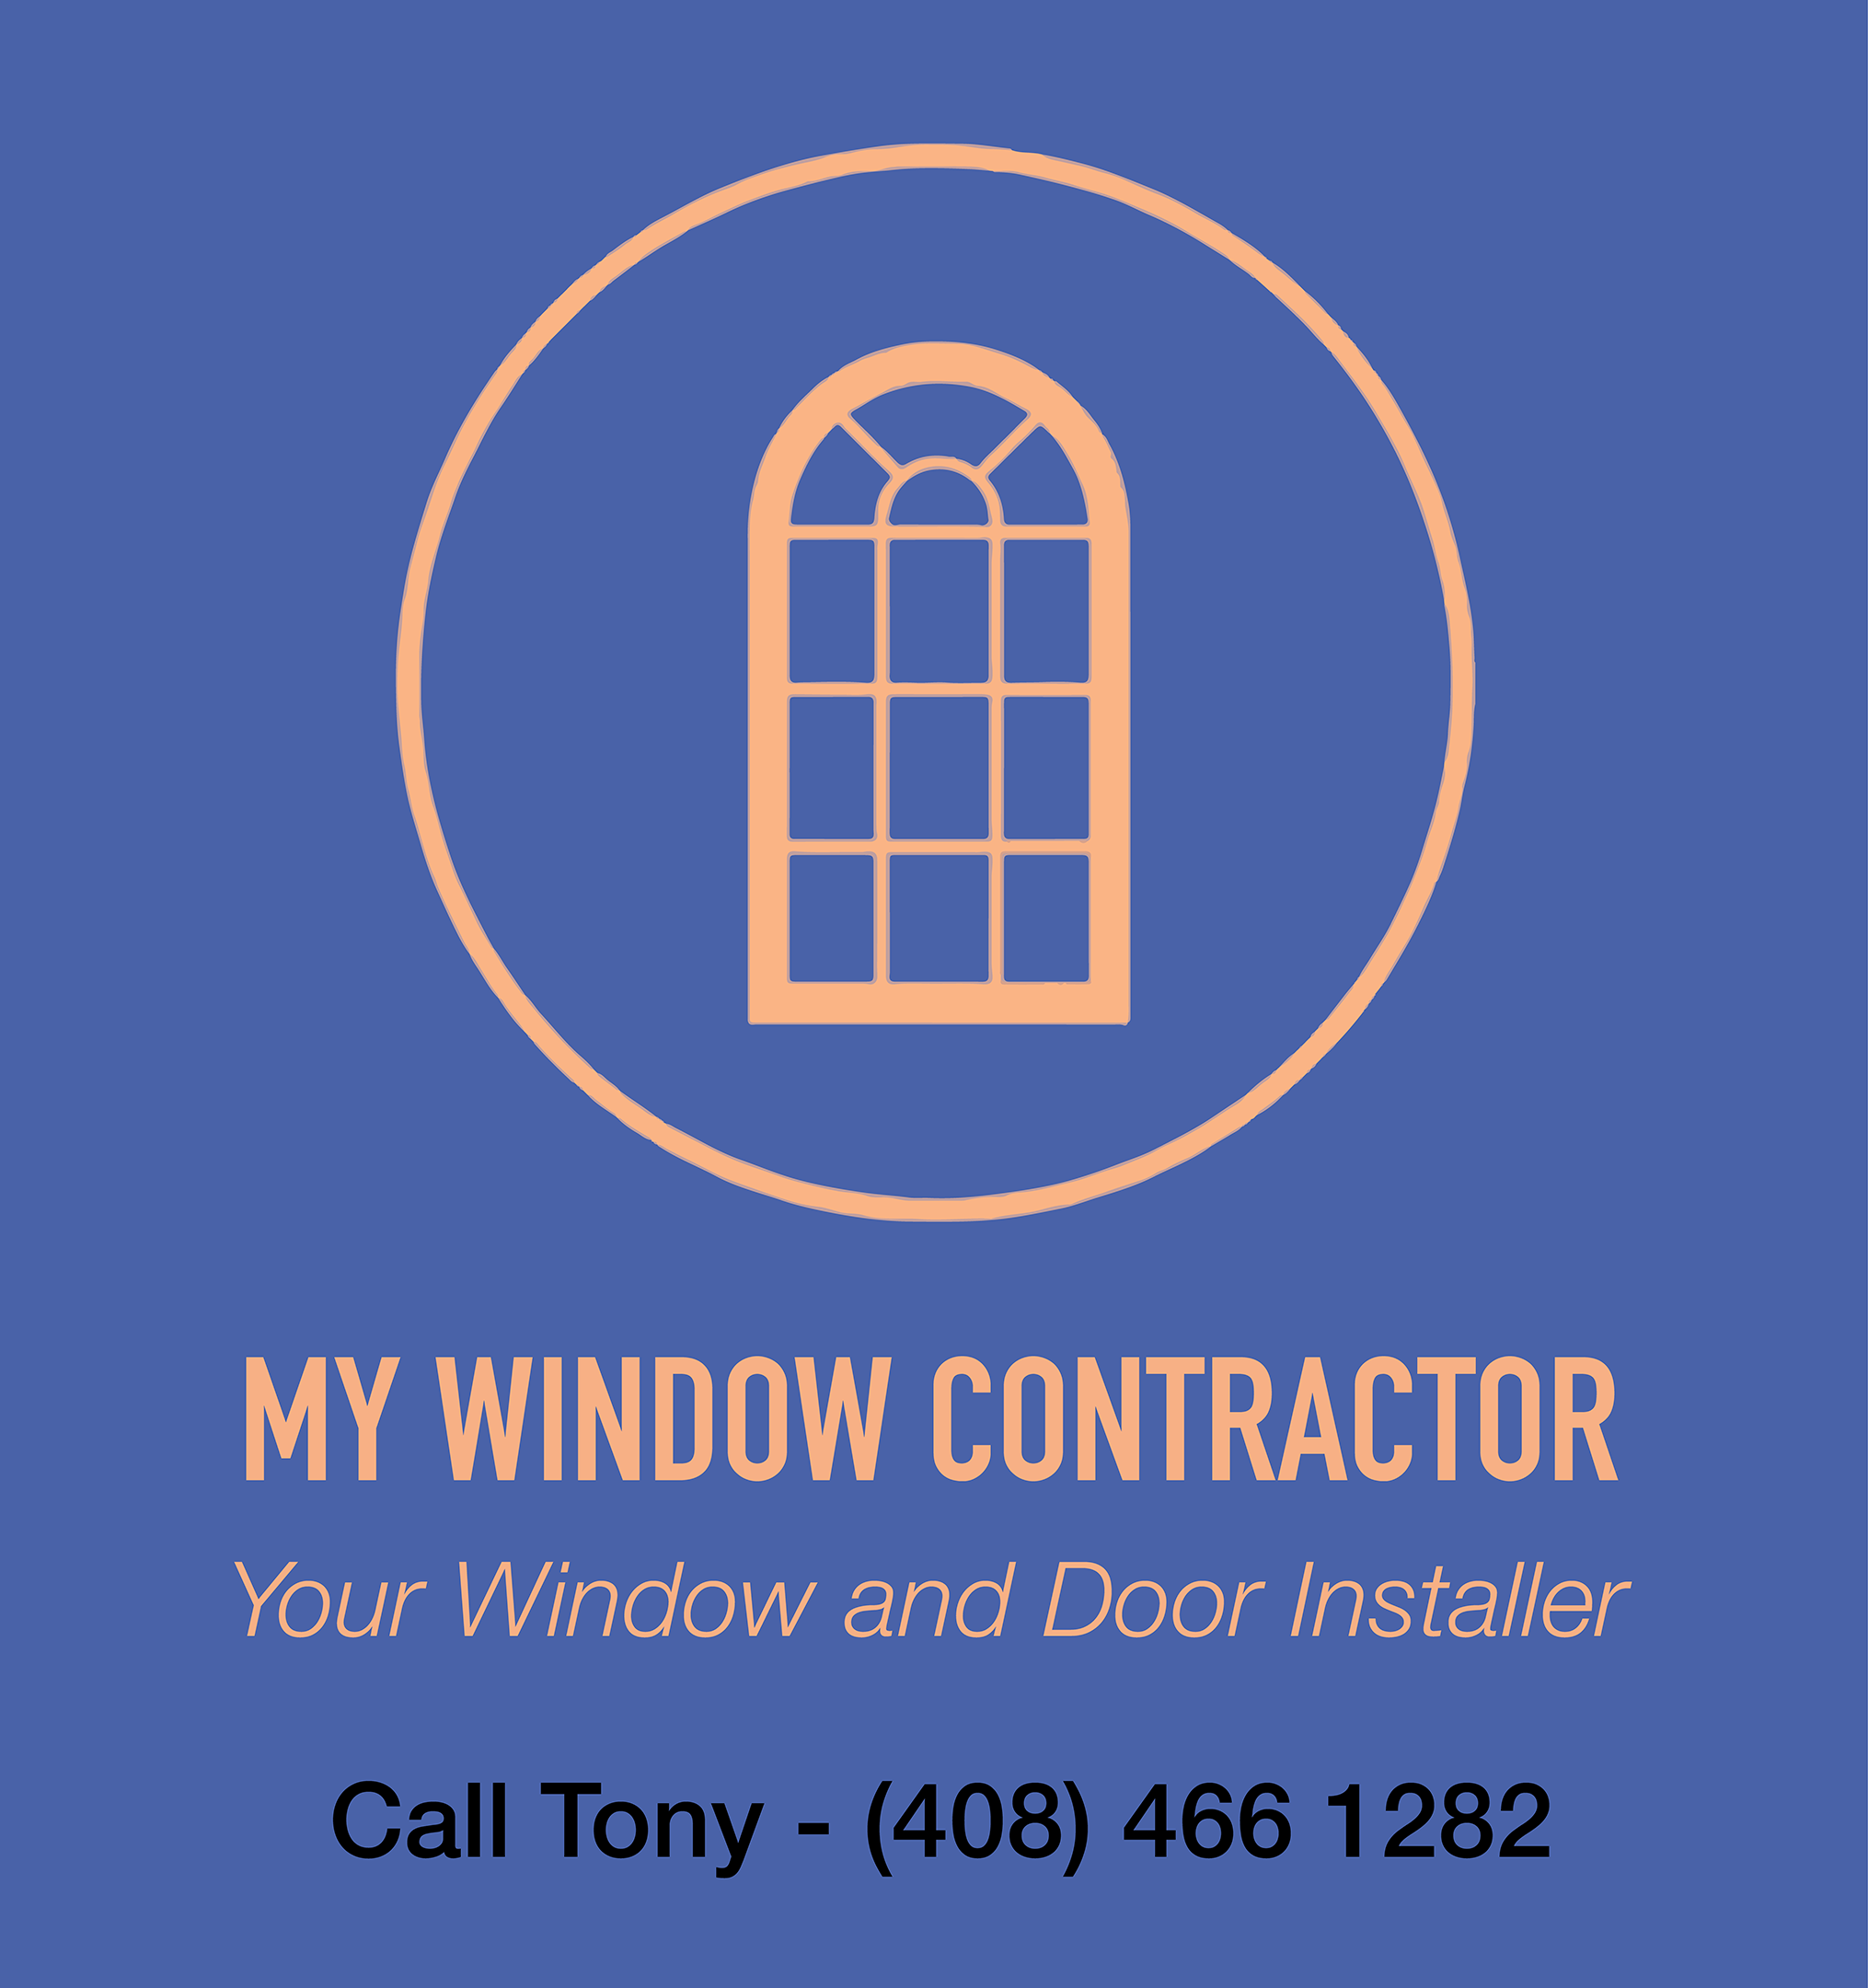 My window Contract logo